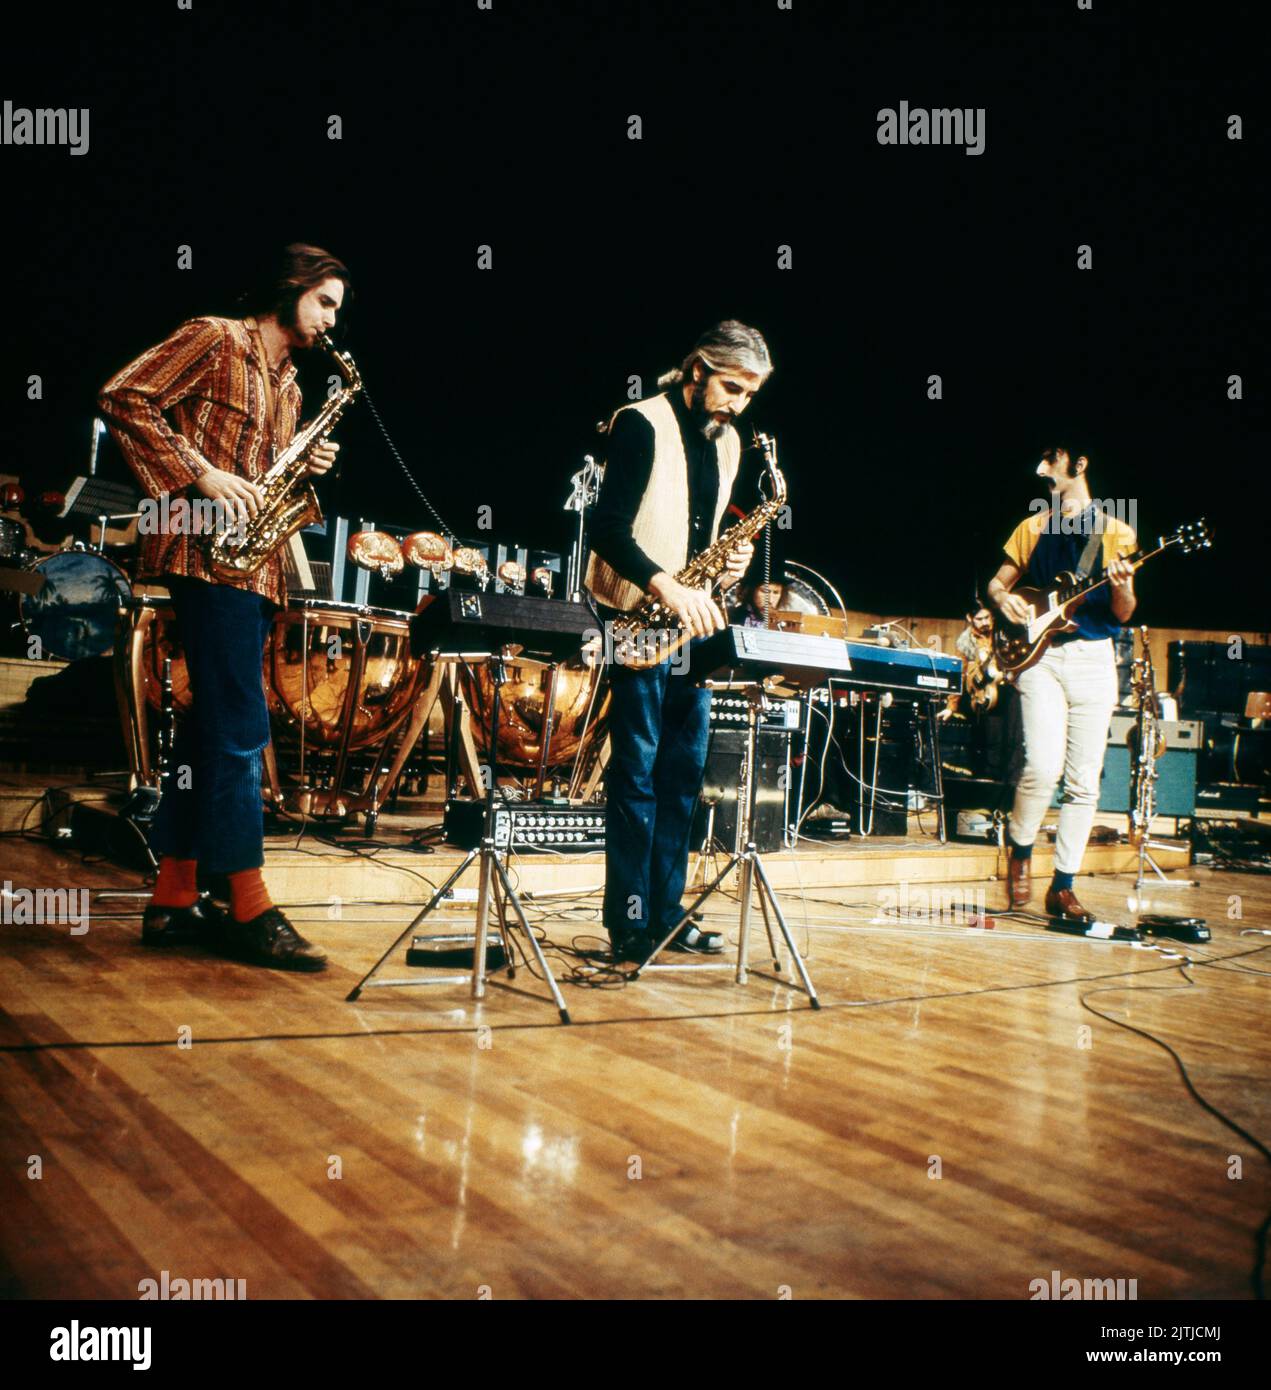 Frank Zappa, amerikanischer Musiker, spielt Jazzrock, Blues, Avantgarde, art rock, hier bei einem Konzert mit der Band: Mothers of Invention, circa 1968. Frank Zappa, American musician, plays jazz rock, blues, avant-garde, art rock, here at a concert with the band: Mothers of Invention, circa 1968 Stock Photo